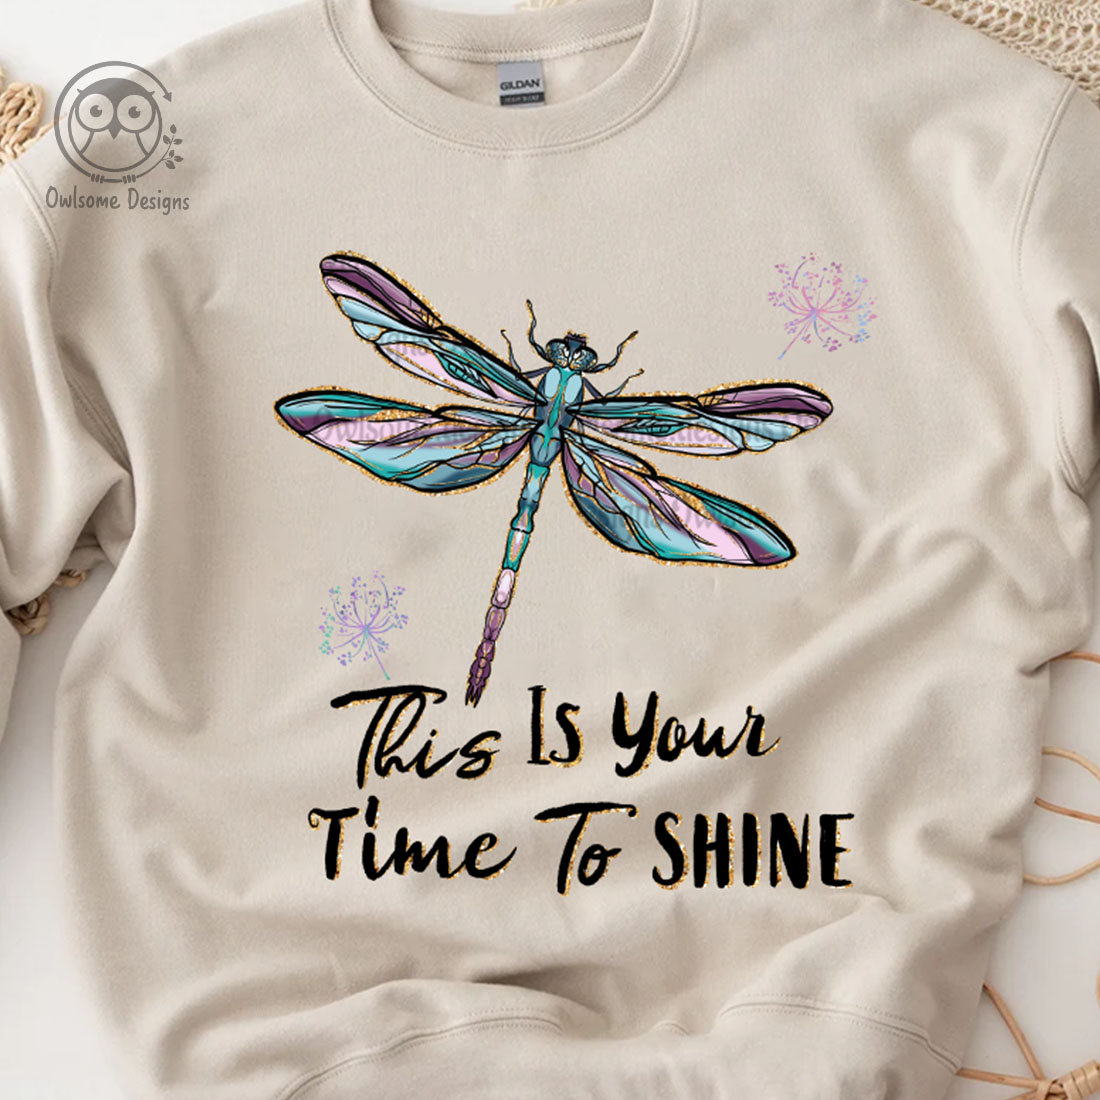 Image of sweatshirt with amazing dragonfly print and slogan.